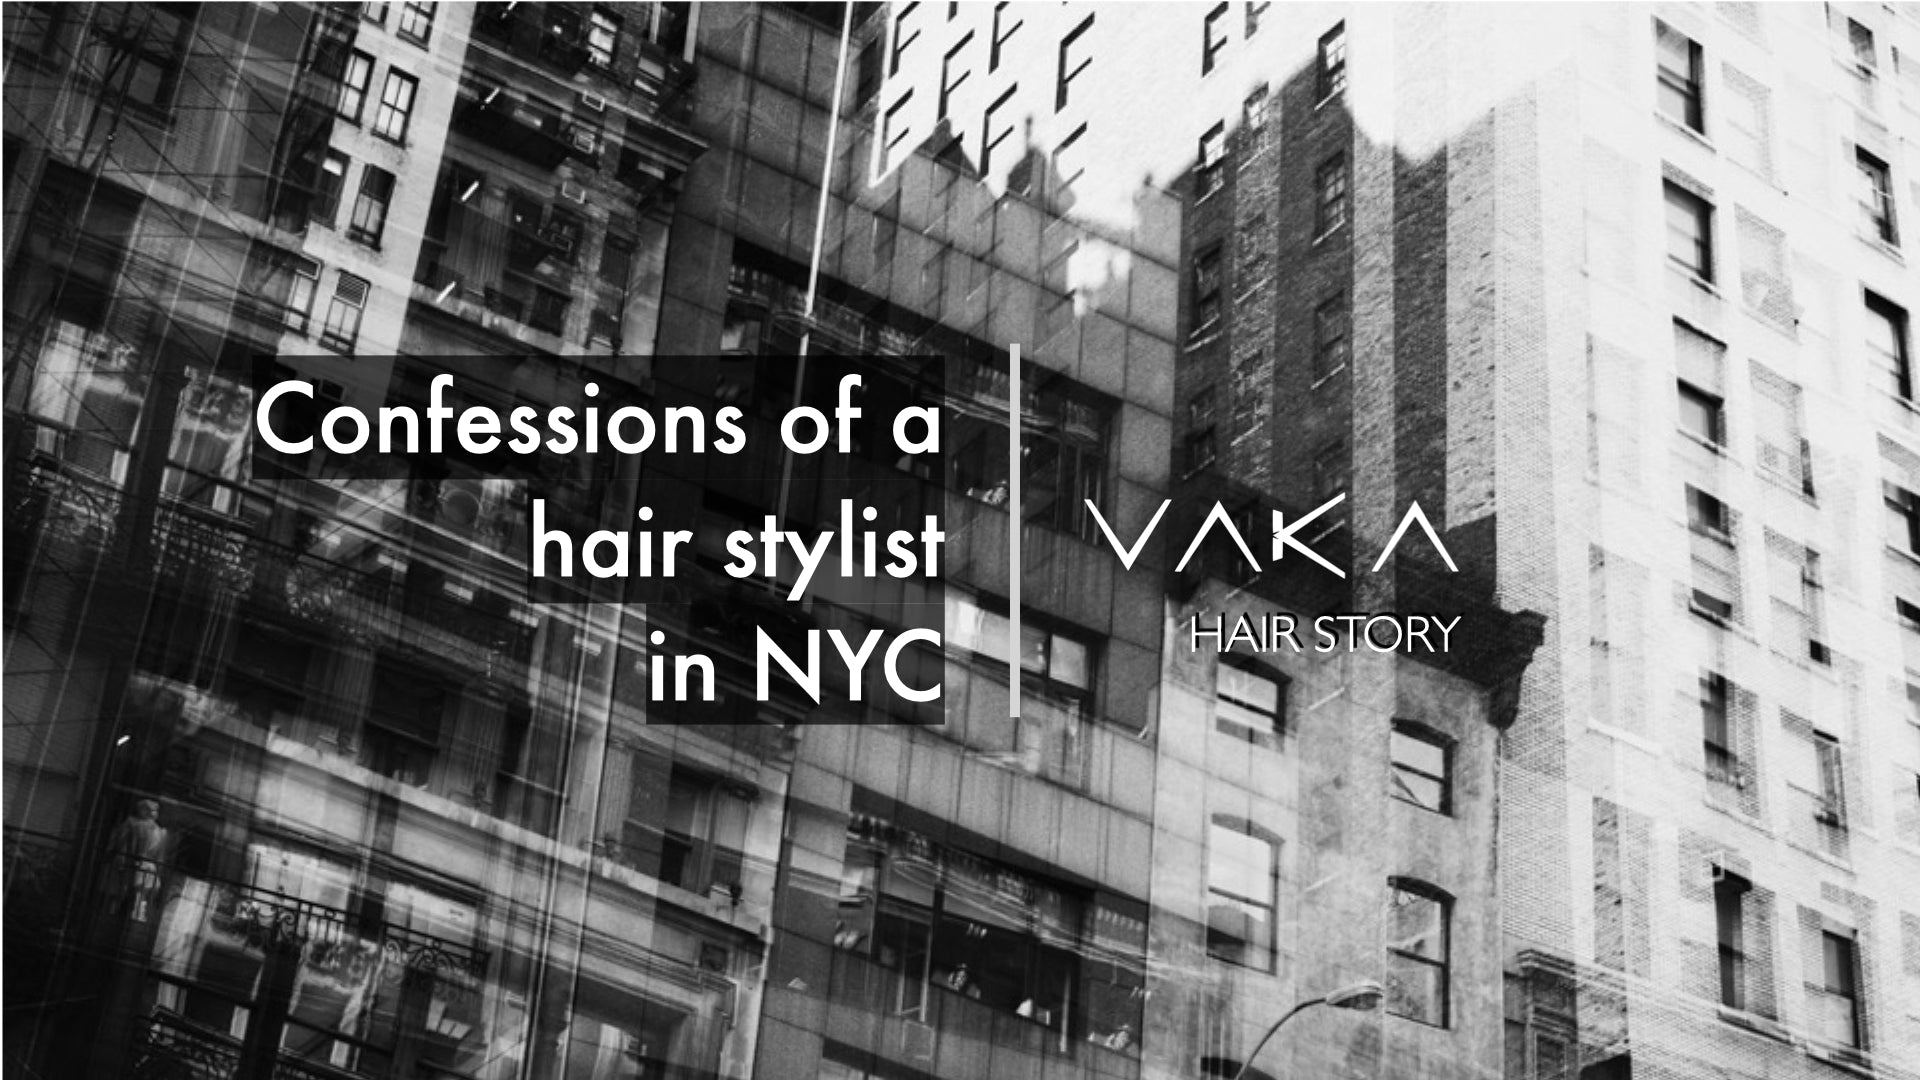 Hair Stylist in NYC reviews VAKA Hair